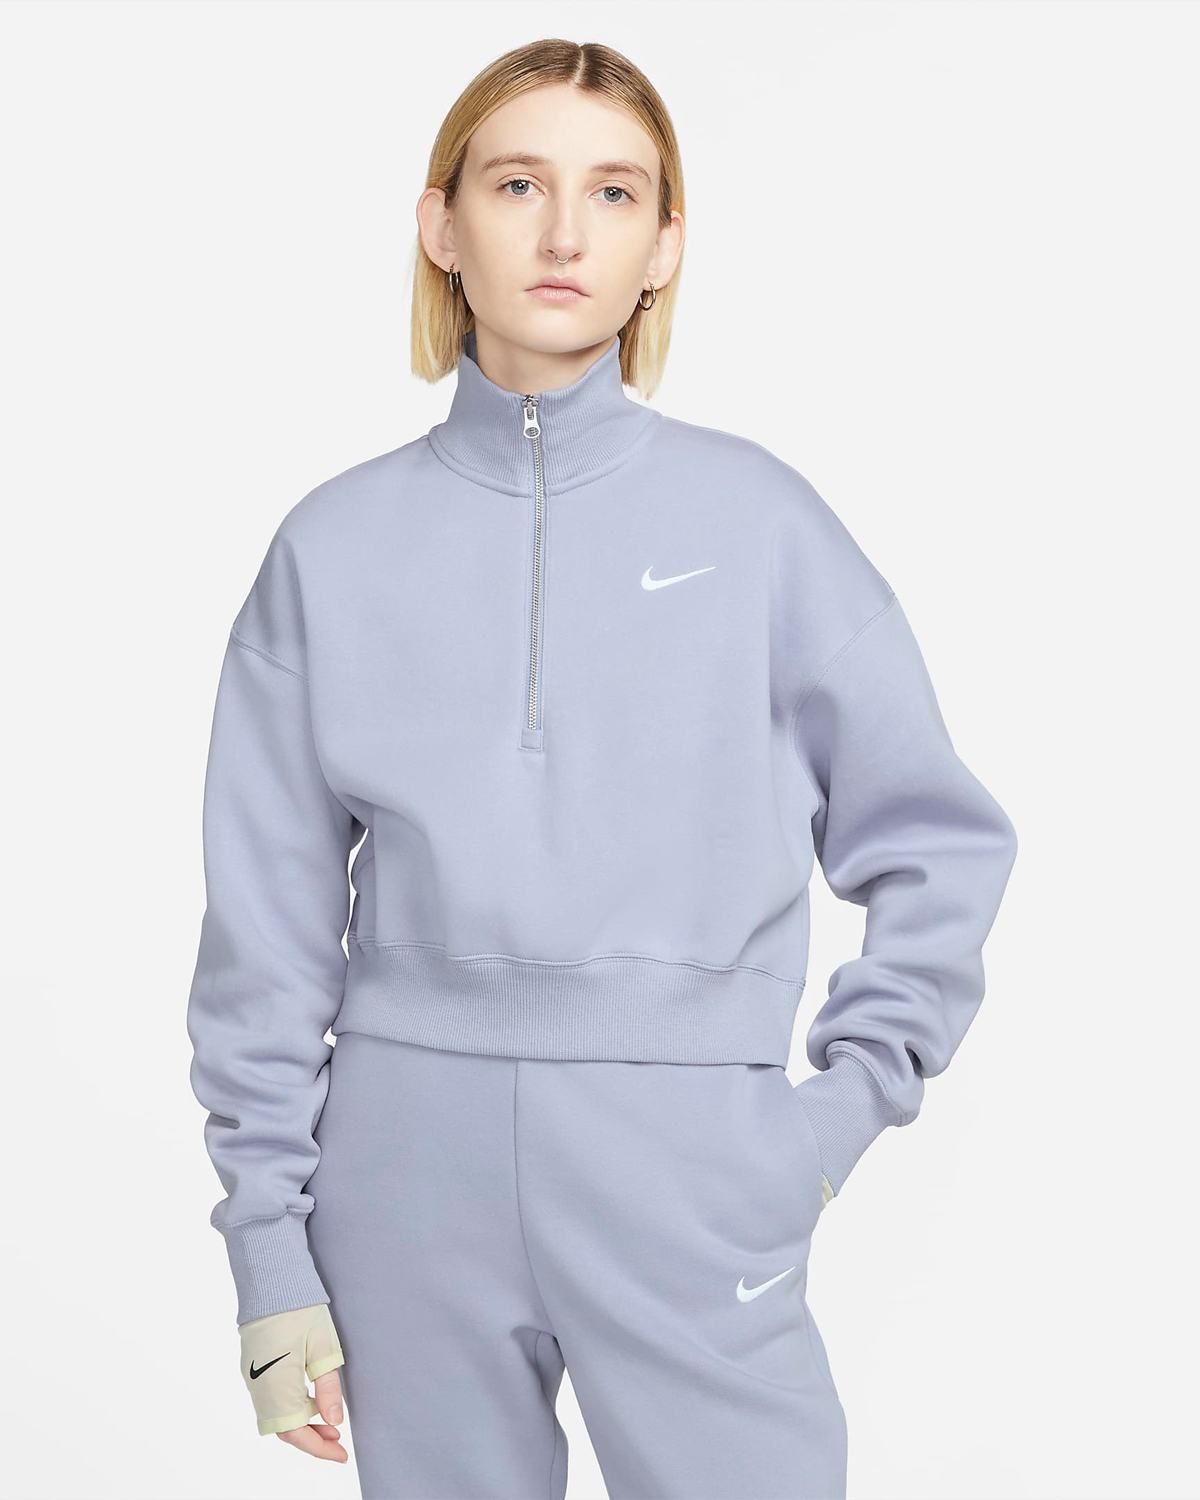 Nike-Sportswear-Phoenix-Womens-Half-Zip-Sweatshirt-Indigo-Haze